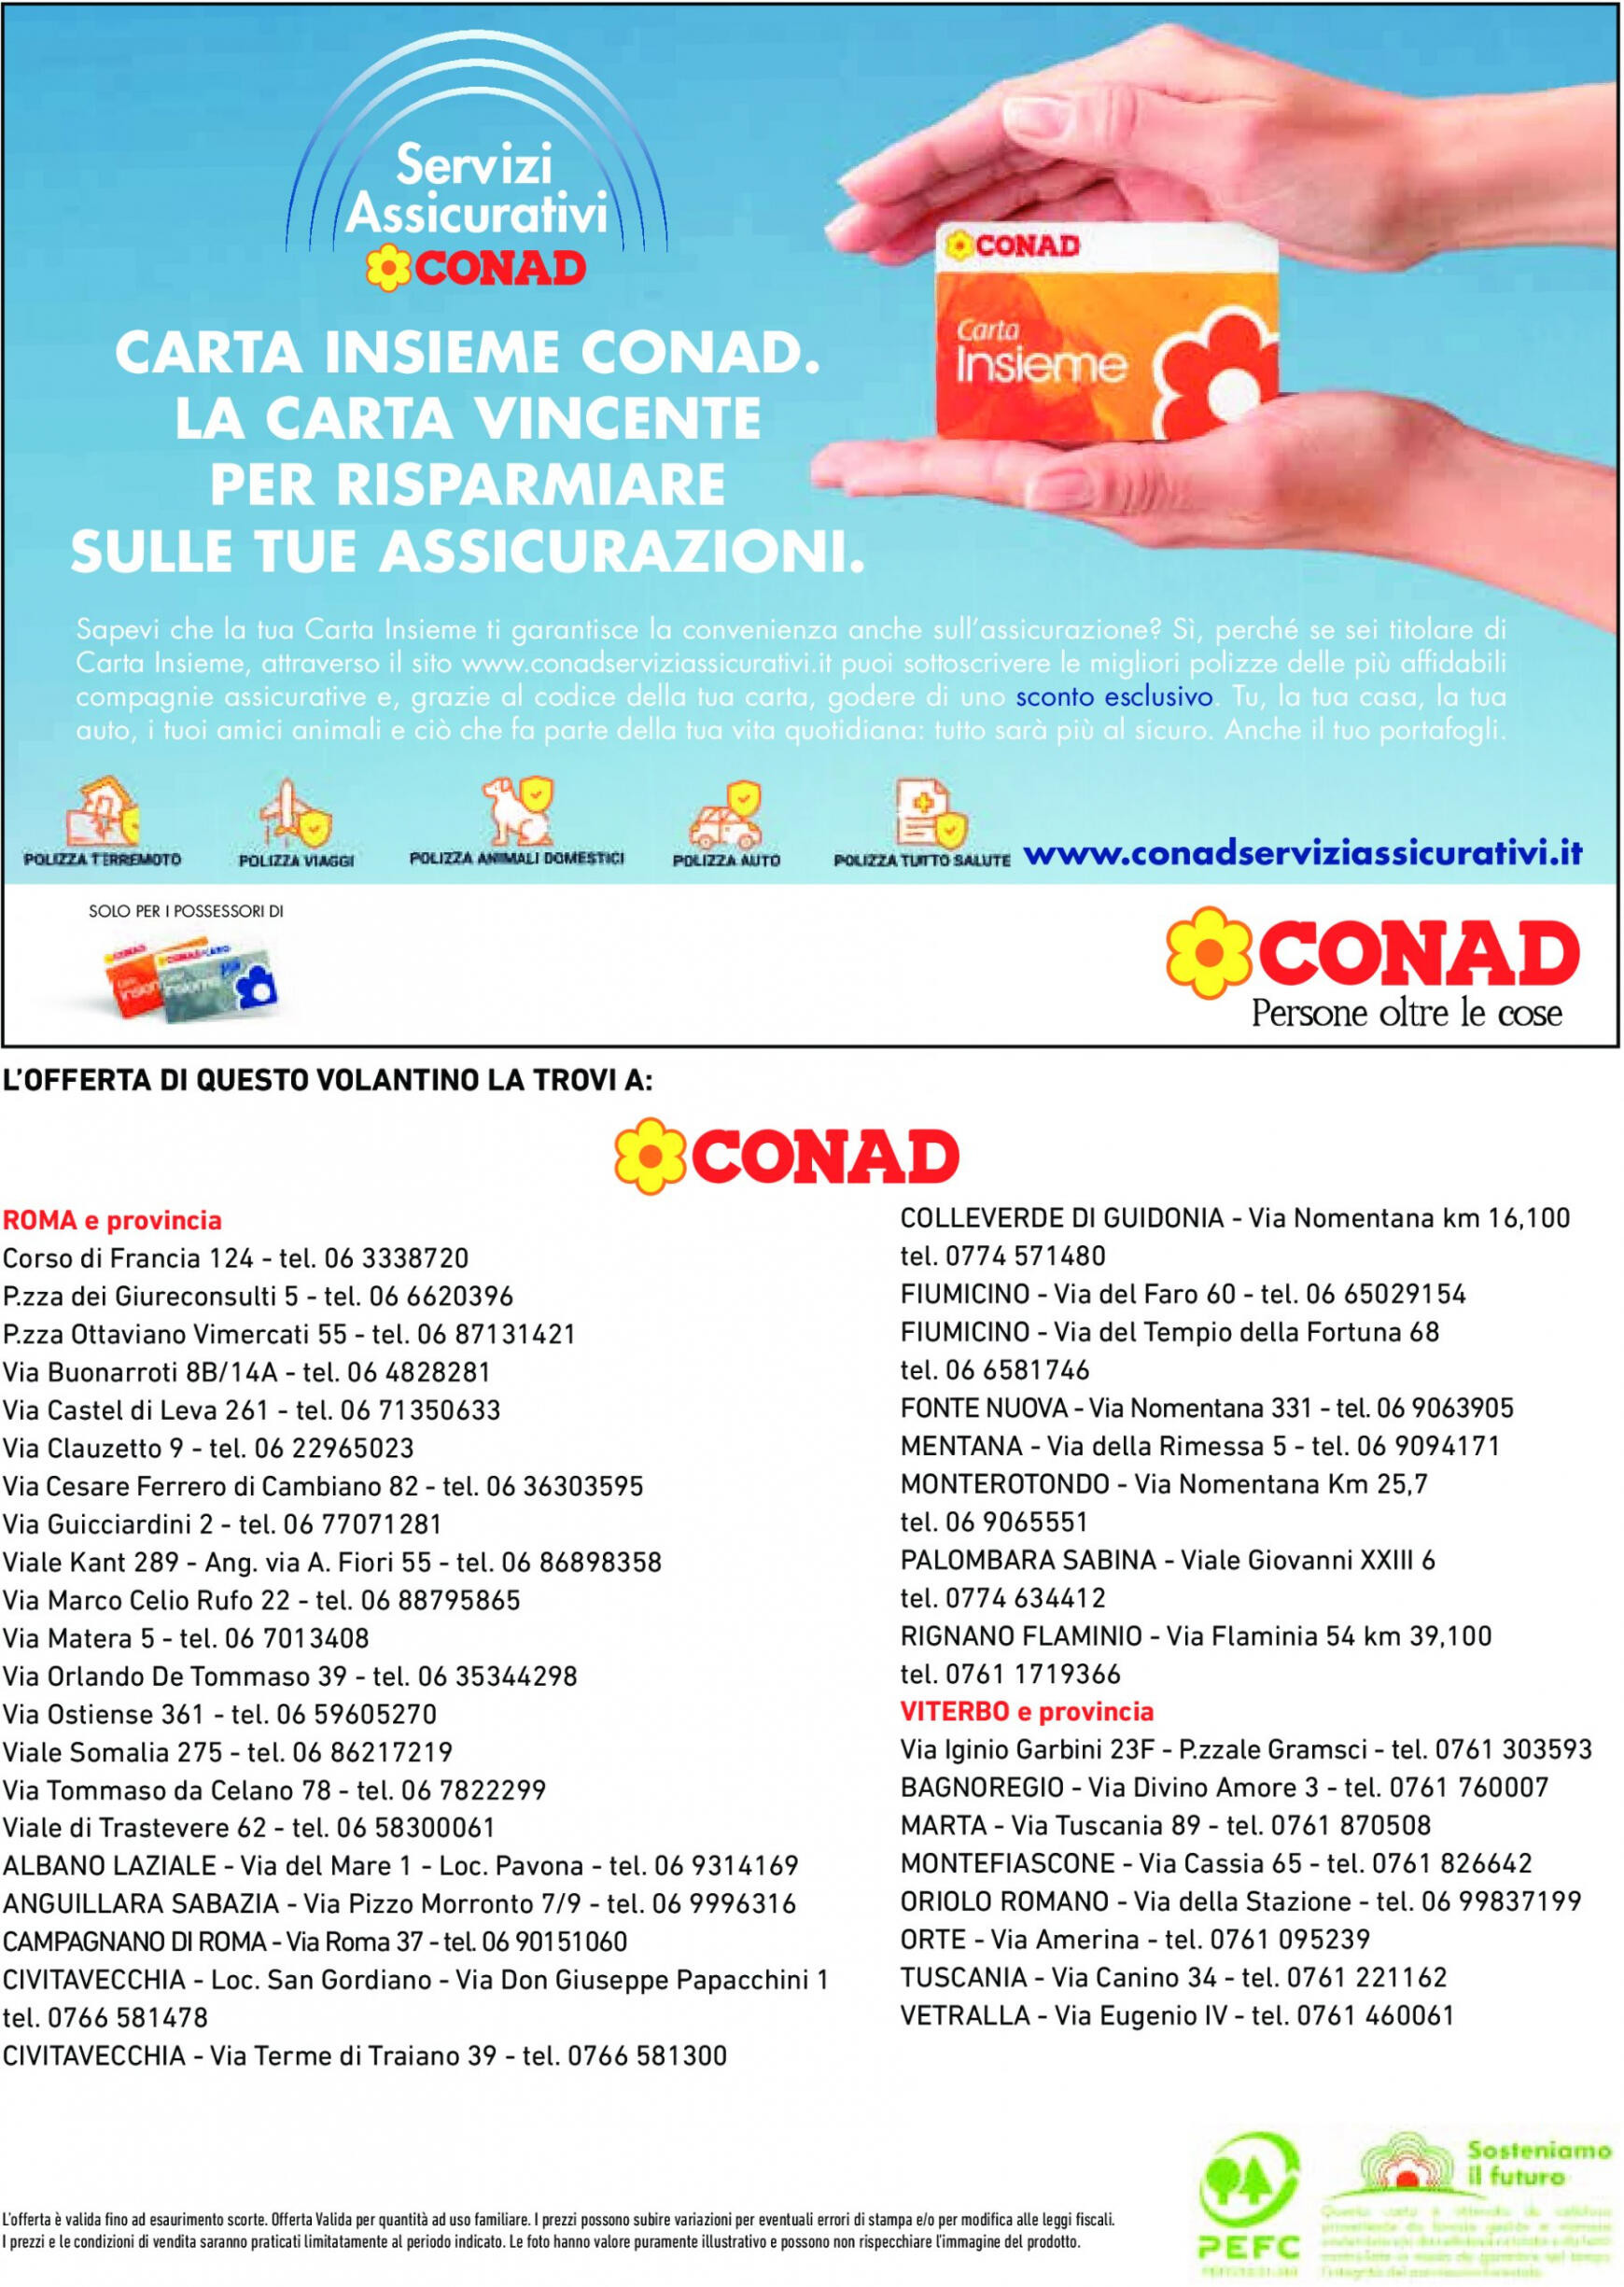 conad - Nuovo volantino Conad 15.05. - 11.06. - page: 12